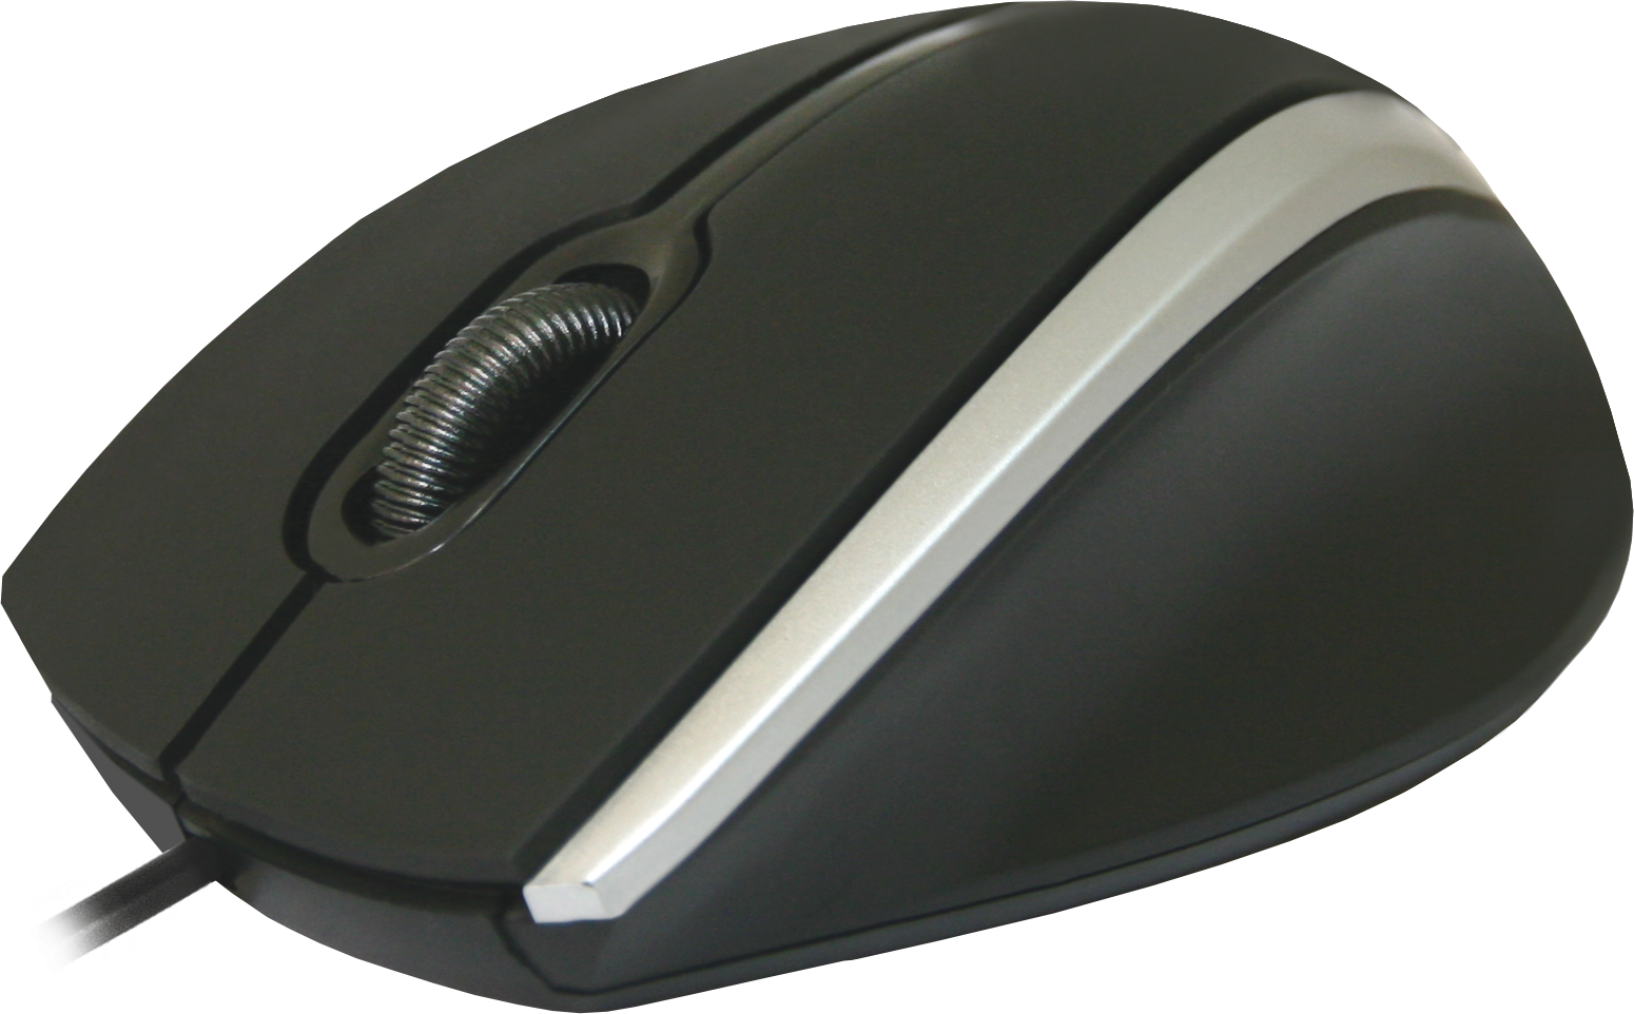 Мышь Defender провод MM-340 черный+серый, 3кн,1000dri